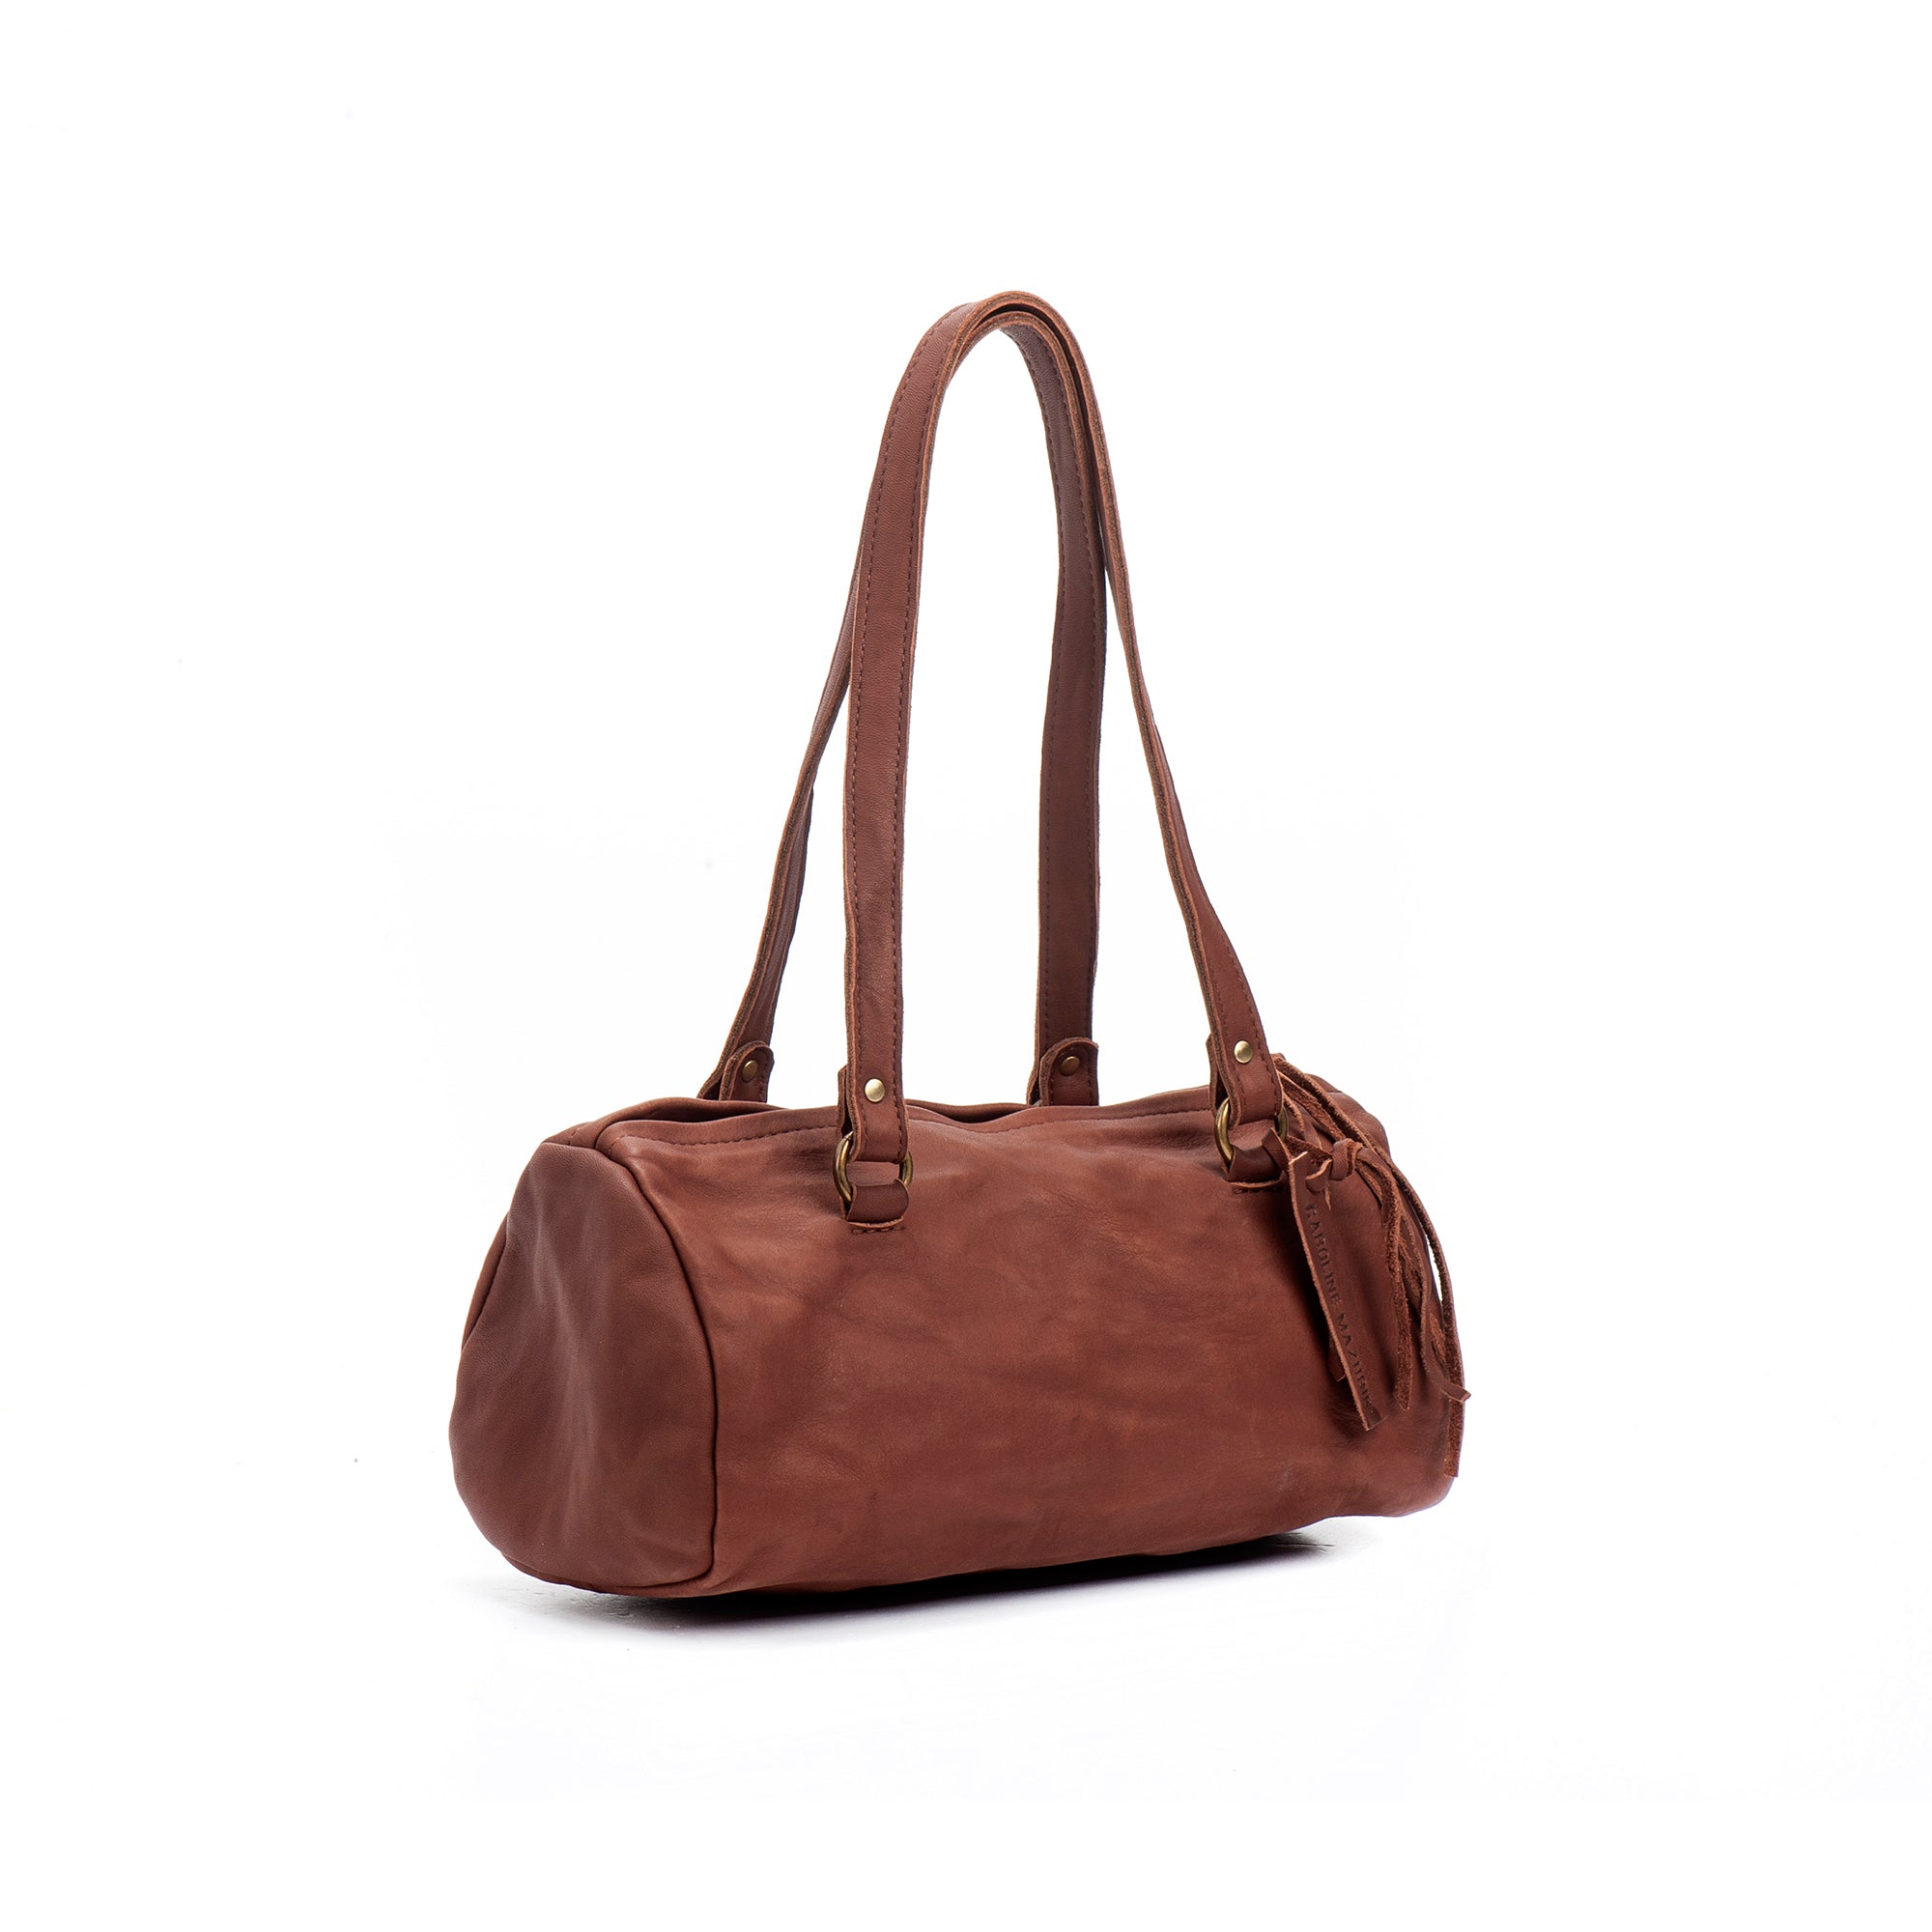 Brick Brown Leather Shoulder Handbag medium perfect size Italian leather woman bag